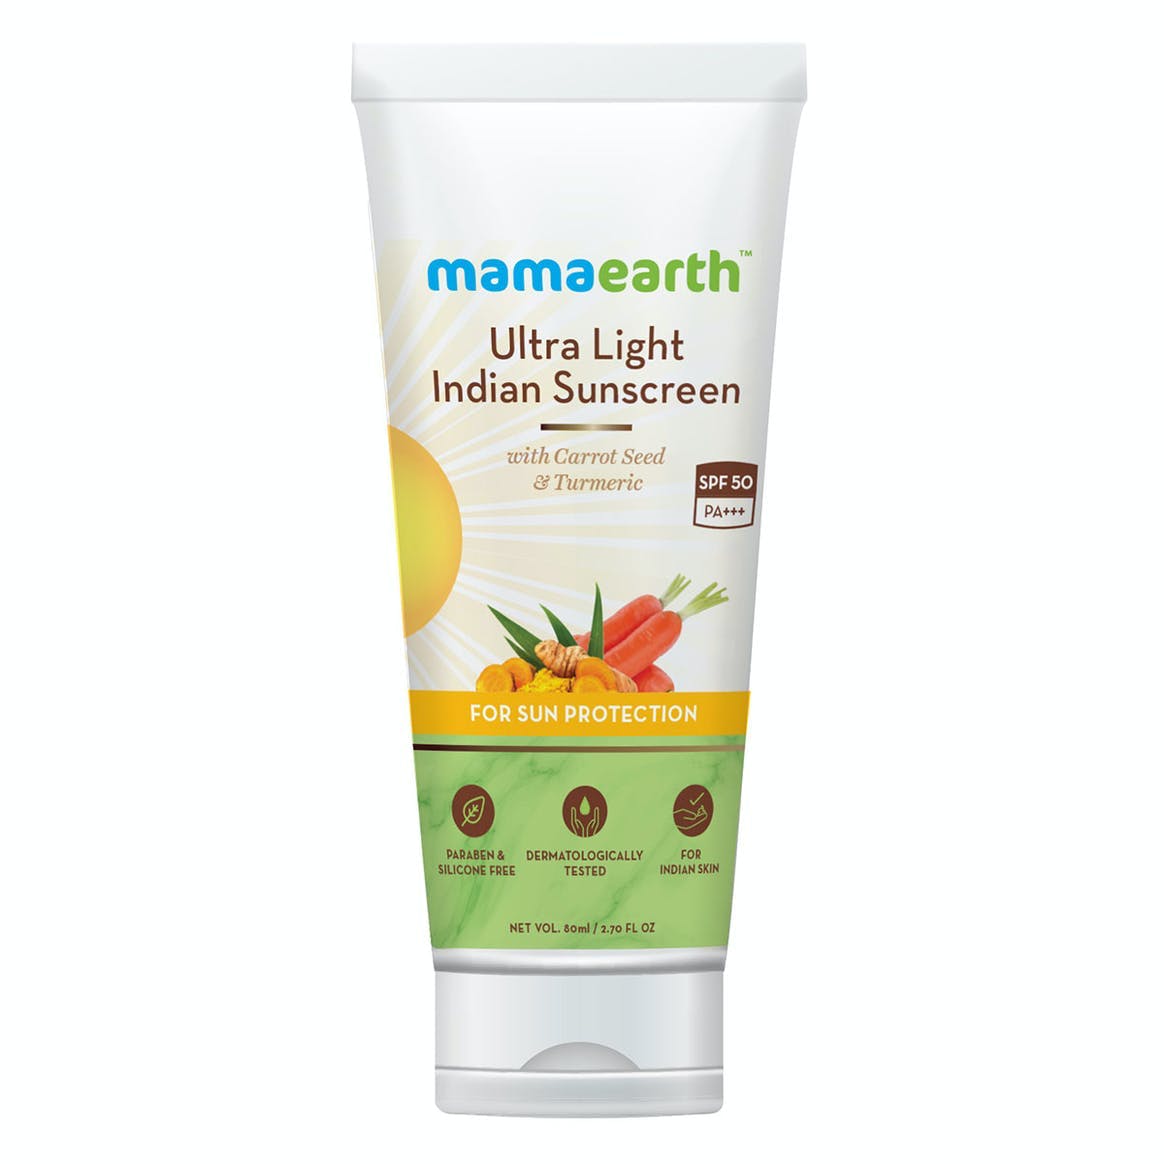 Mama Earth’s Ultra Light Indian Sunscreen